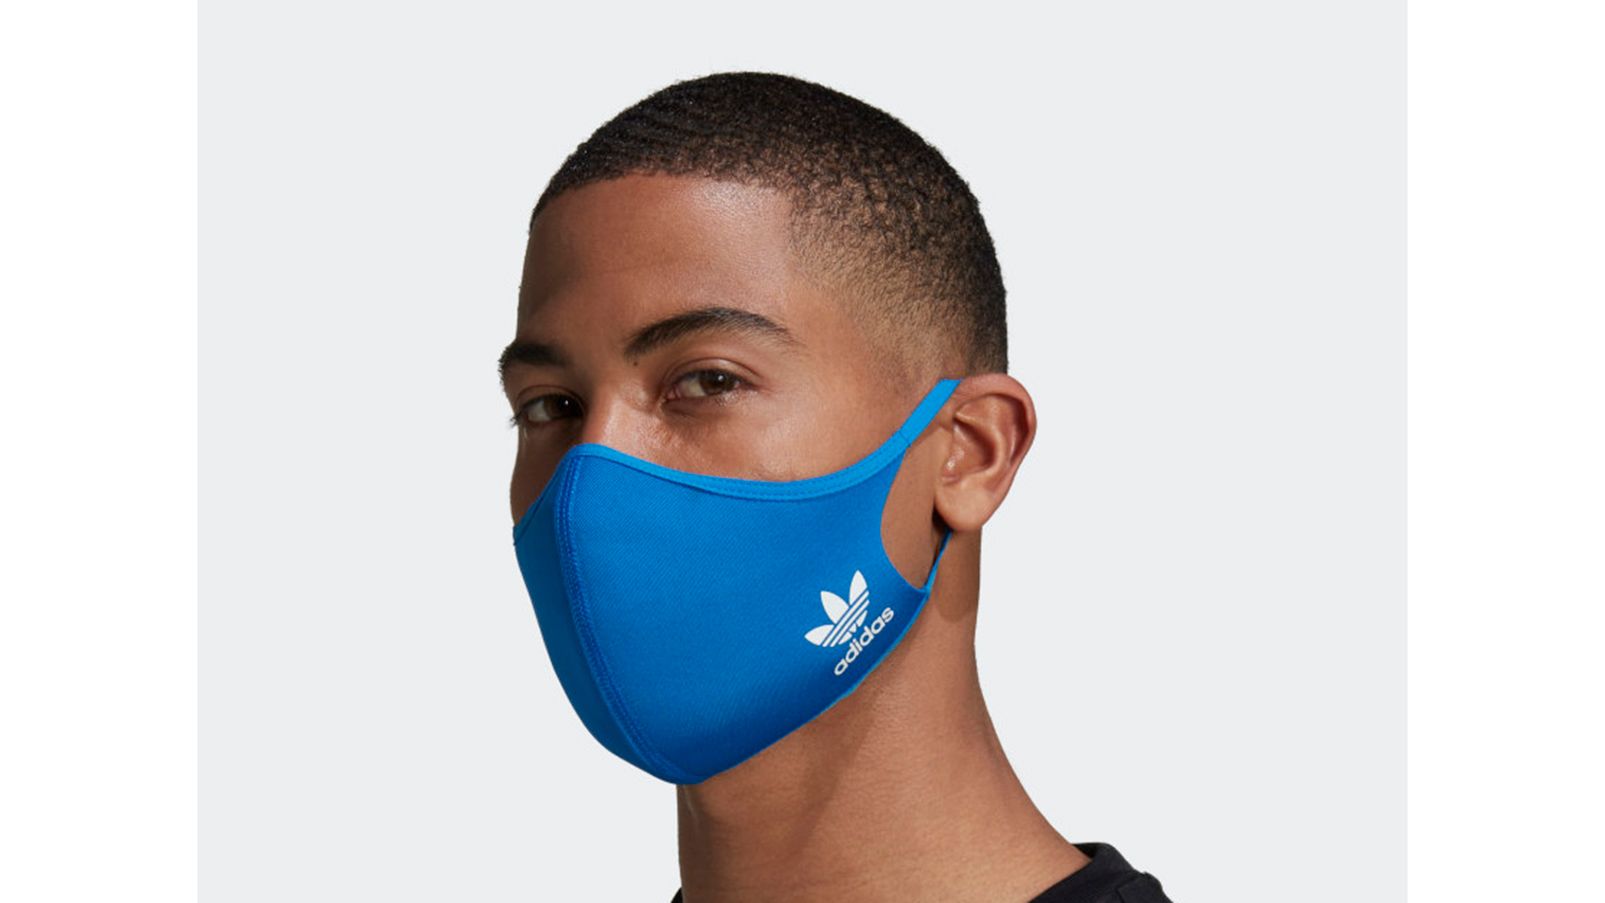 Cloth face masks for running errands or the office | CNN Underscored